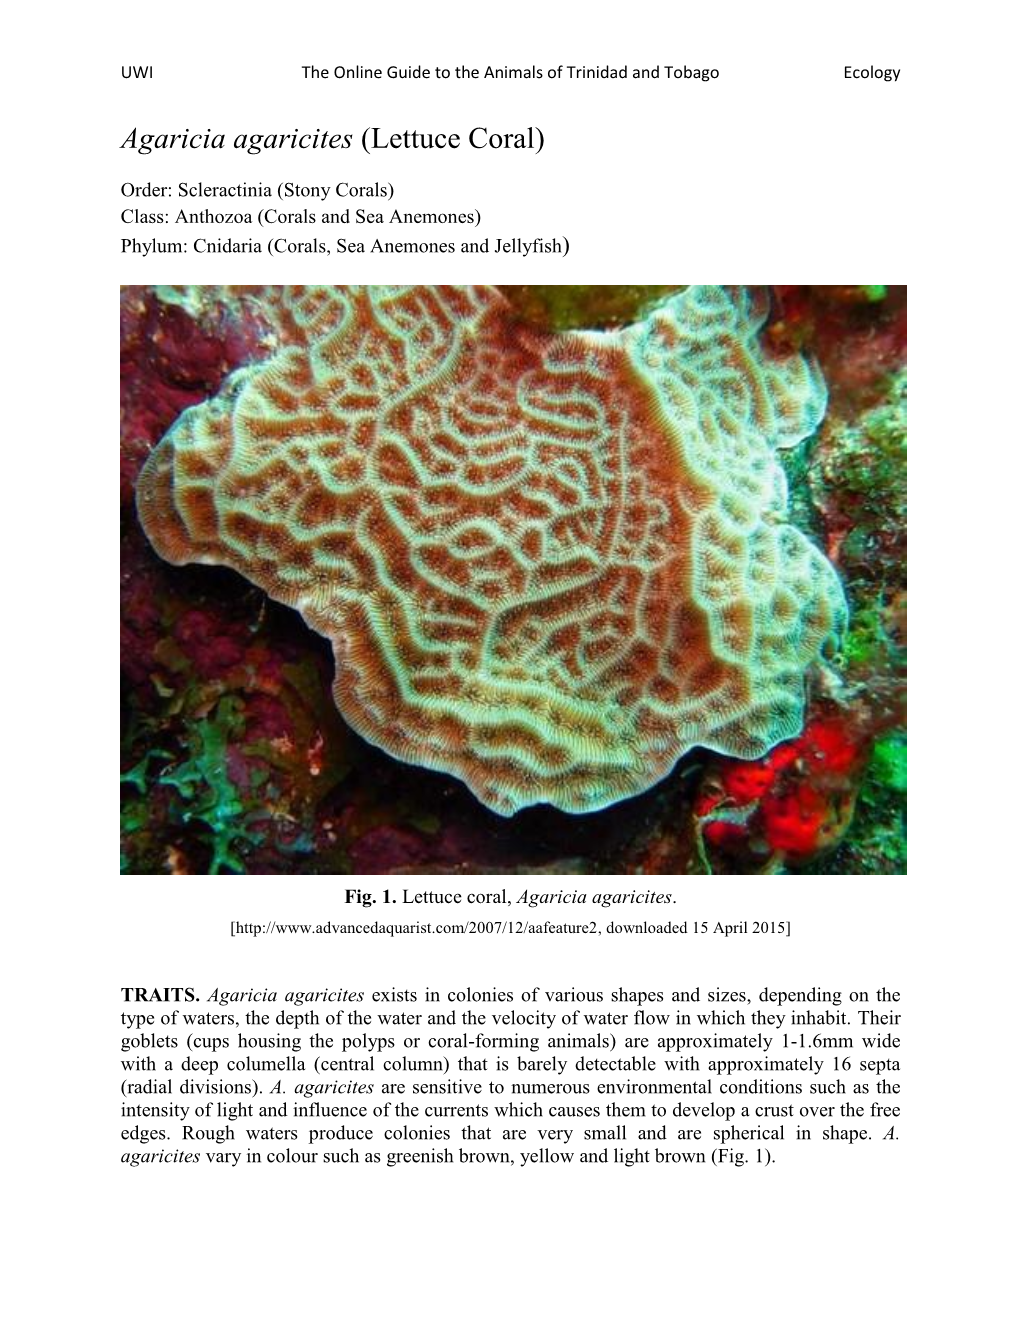 Agaricia Agaricites (Lettuce Coral)